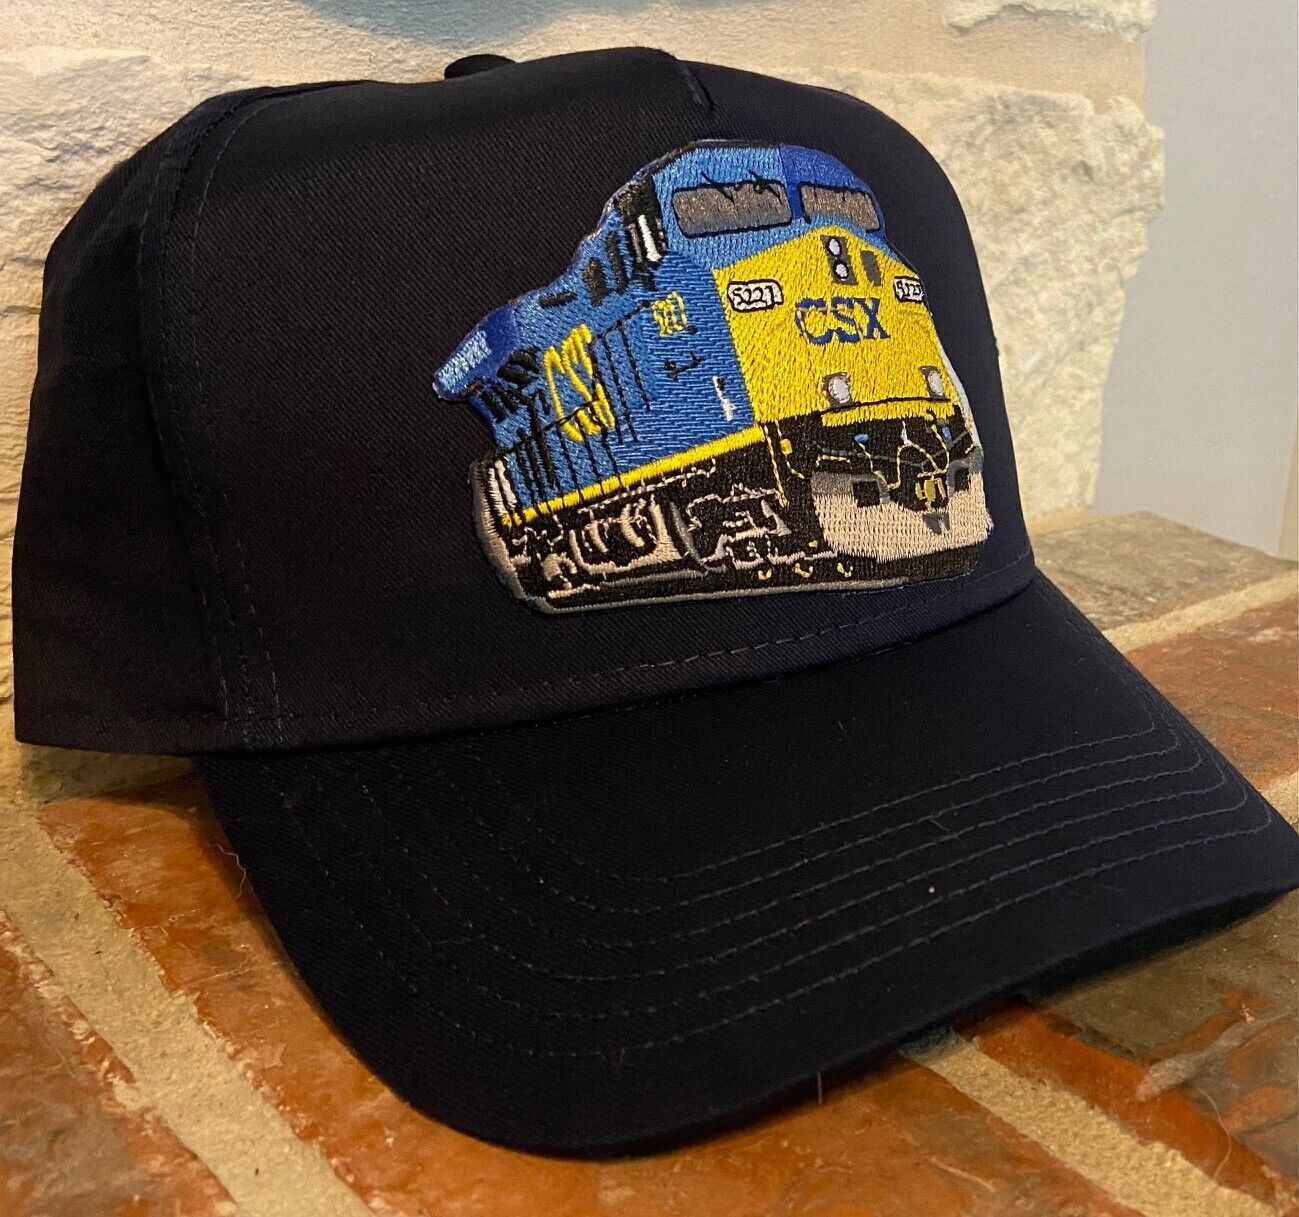 Cap / Hat -(Navy Blue)- CSX Railroad Locomotive (CSX) - #22392 -NEW